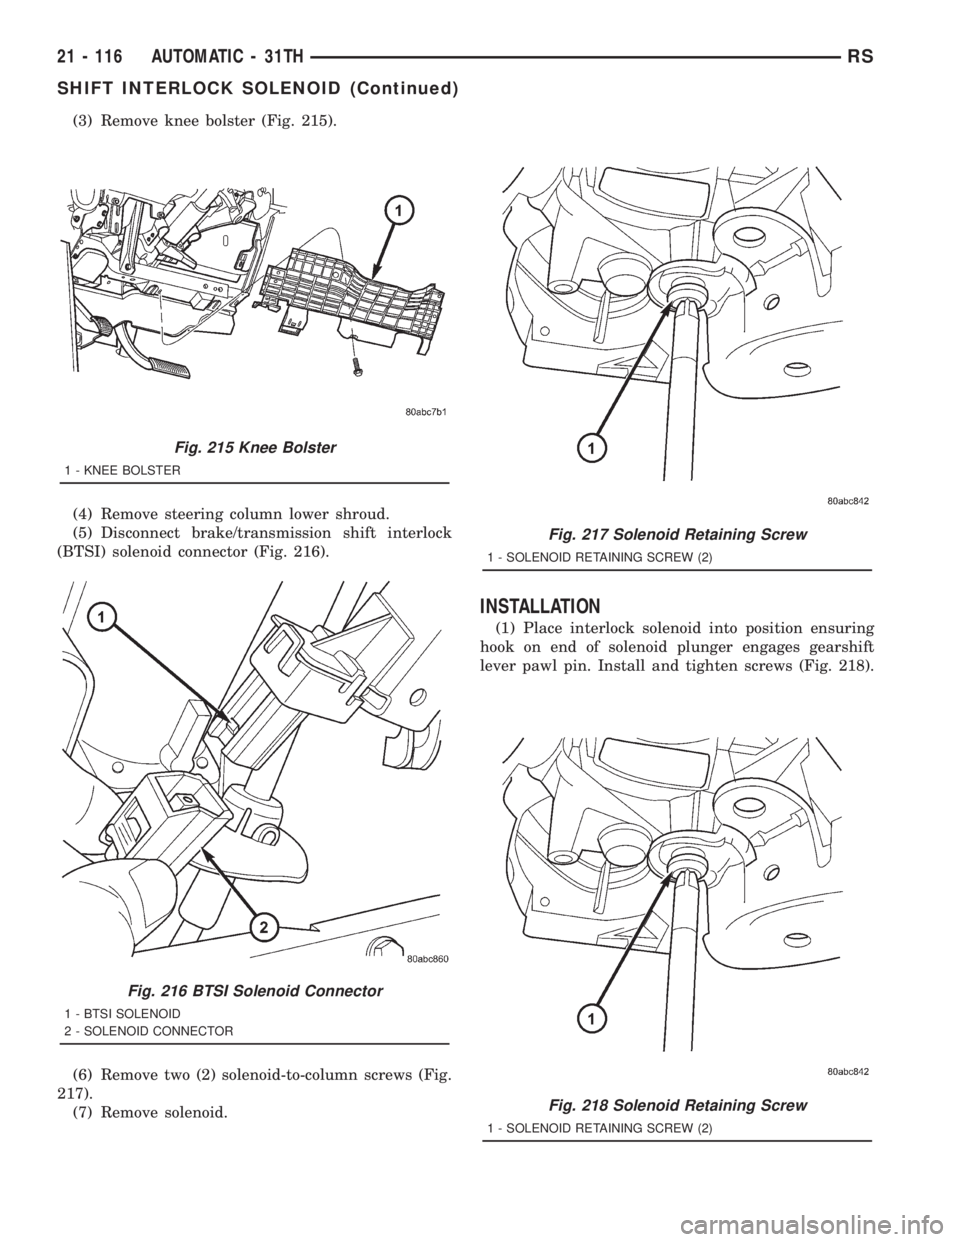 CHRYSLER VOYAGER 2001  Service Manual (3) Remove knee bolster (Fig. 215).
(4) Remove steering column lower shroud.
(5) Disconnect brake/transmission shift interlock
(BTSI) solenoid connector (Fig. 216).
(6) Remove two (2) solenoid-to-colu